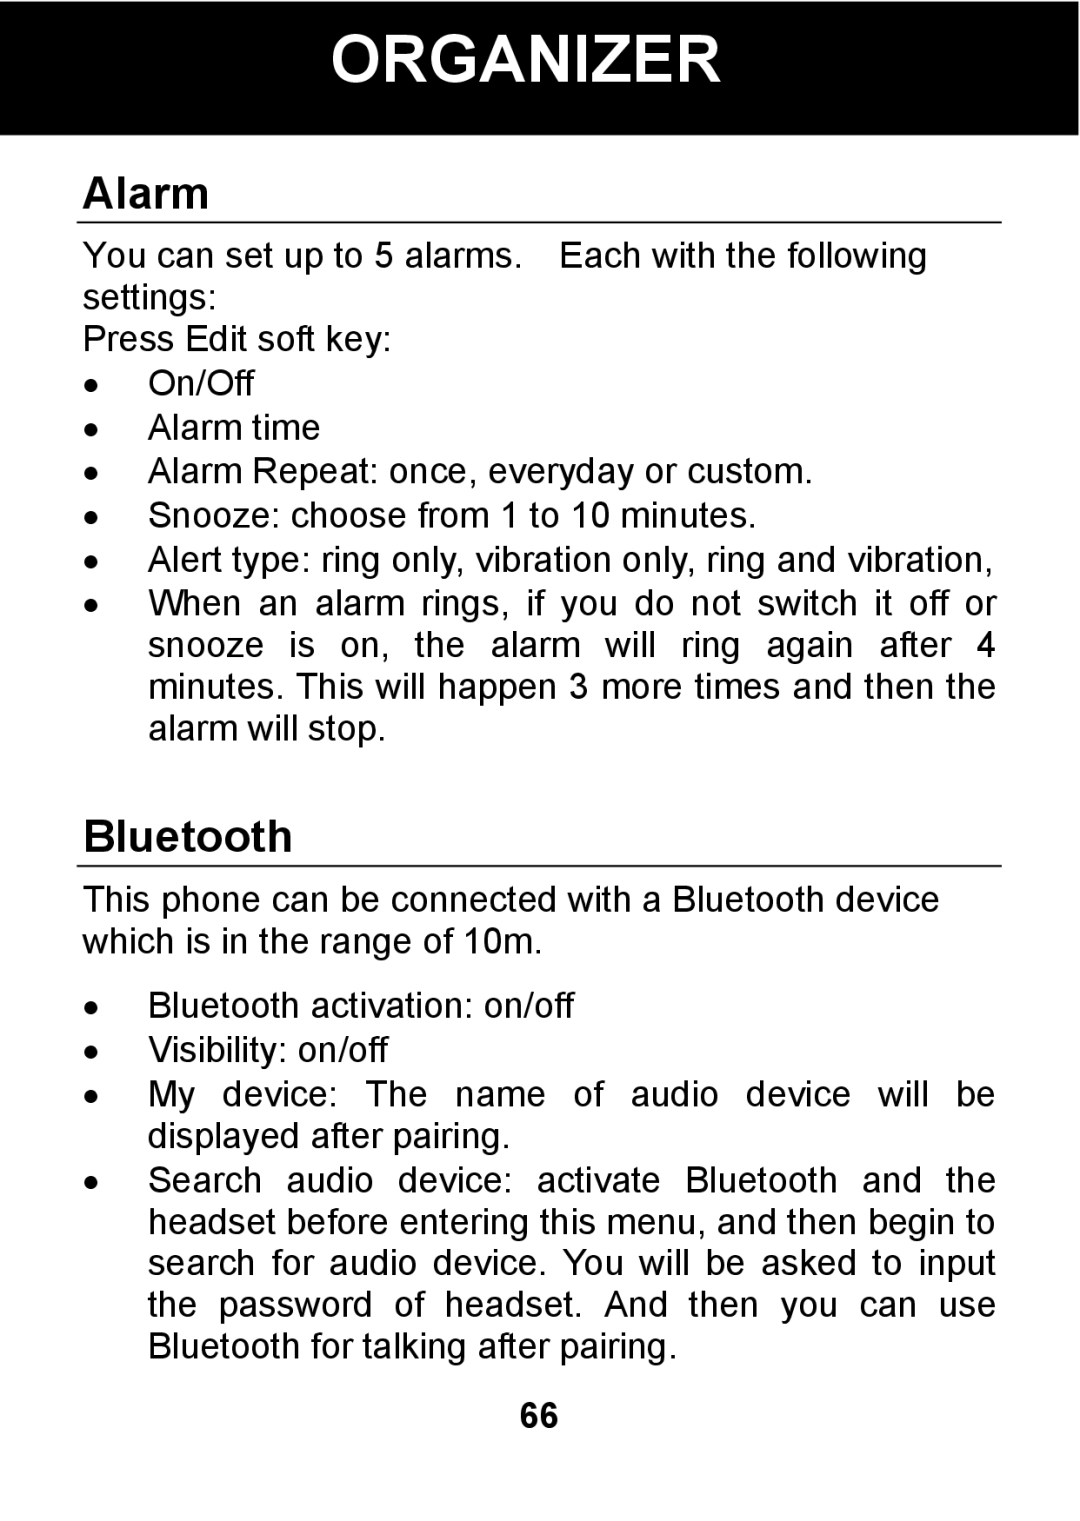 Pal/Pax PAL101 manual Alarm, Bluetooth 